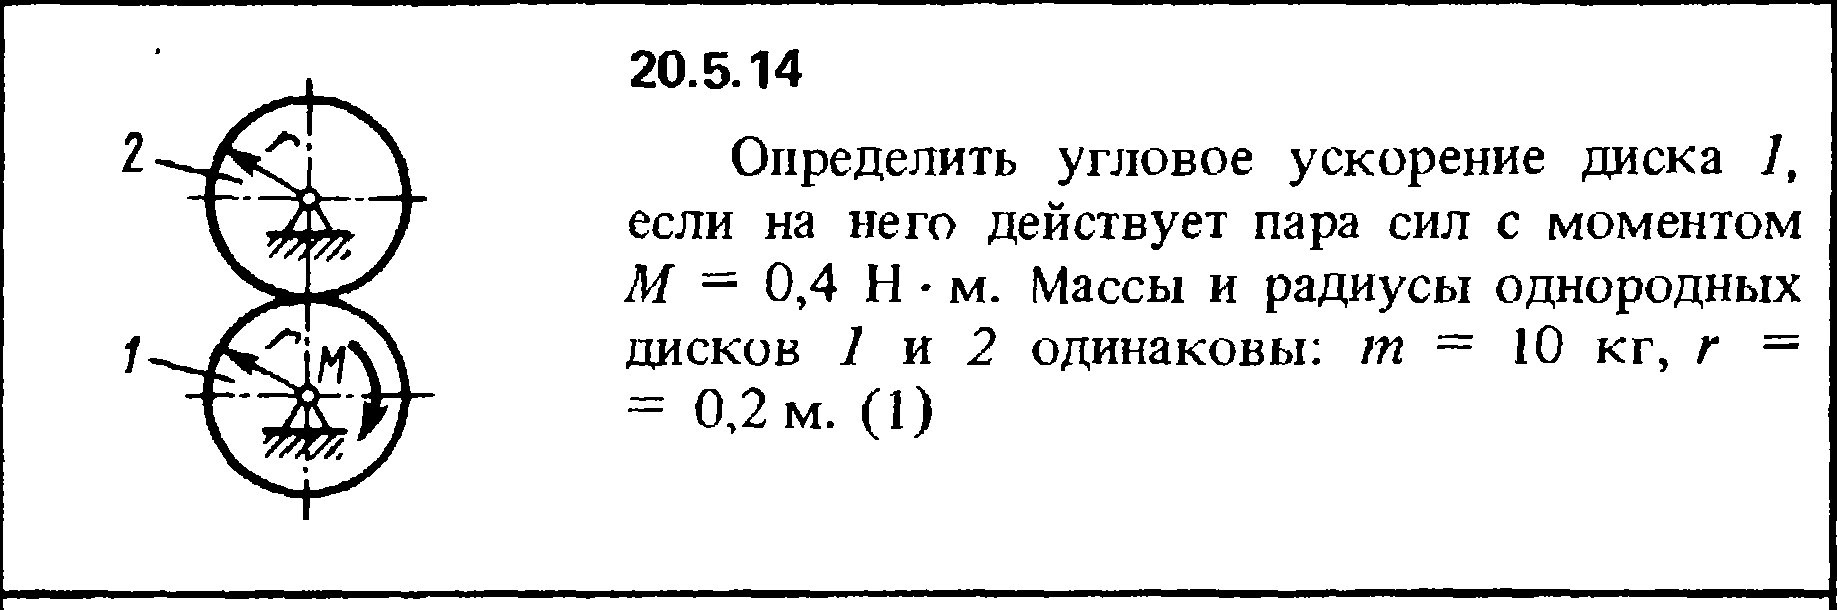 Решение 20.5.14 из сборника (решебника) Кепе О.Е. 1989